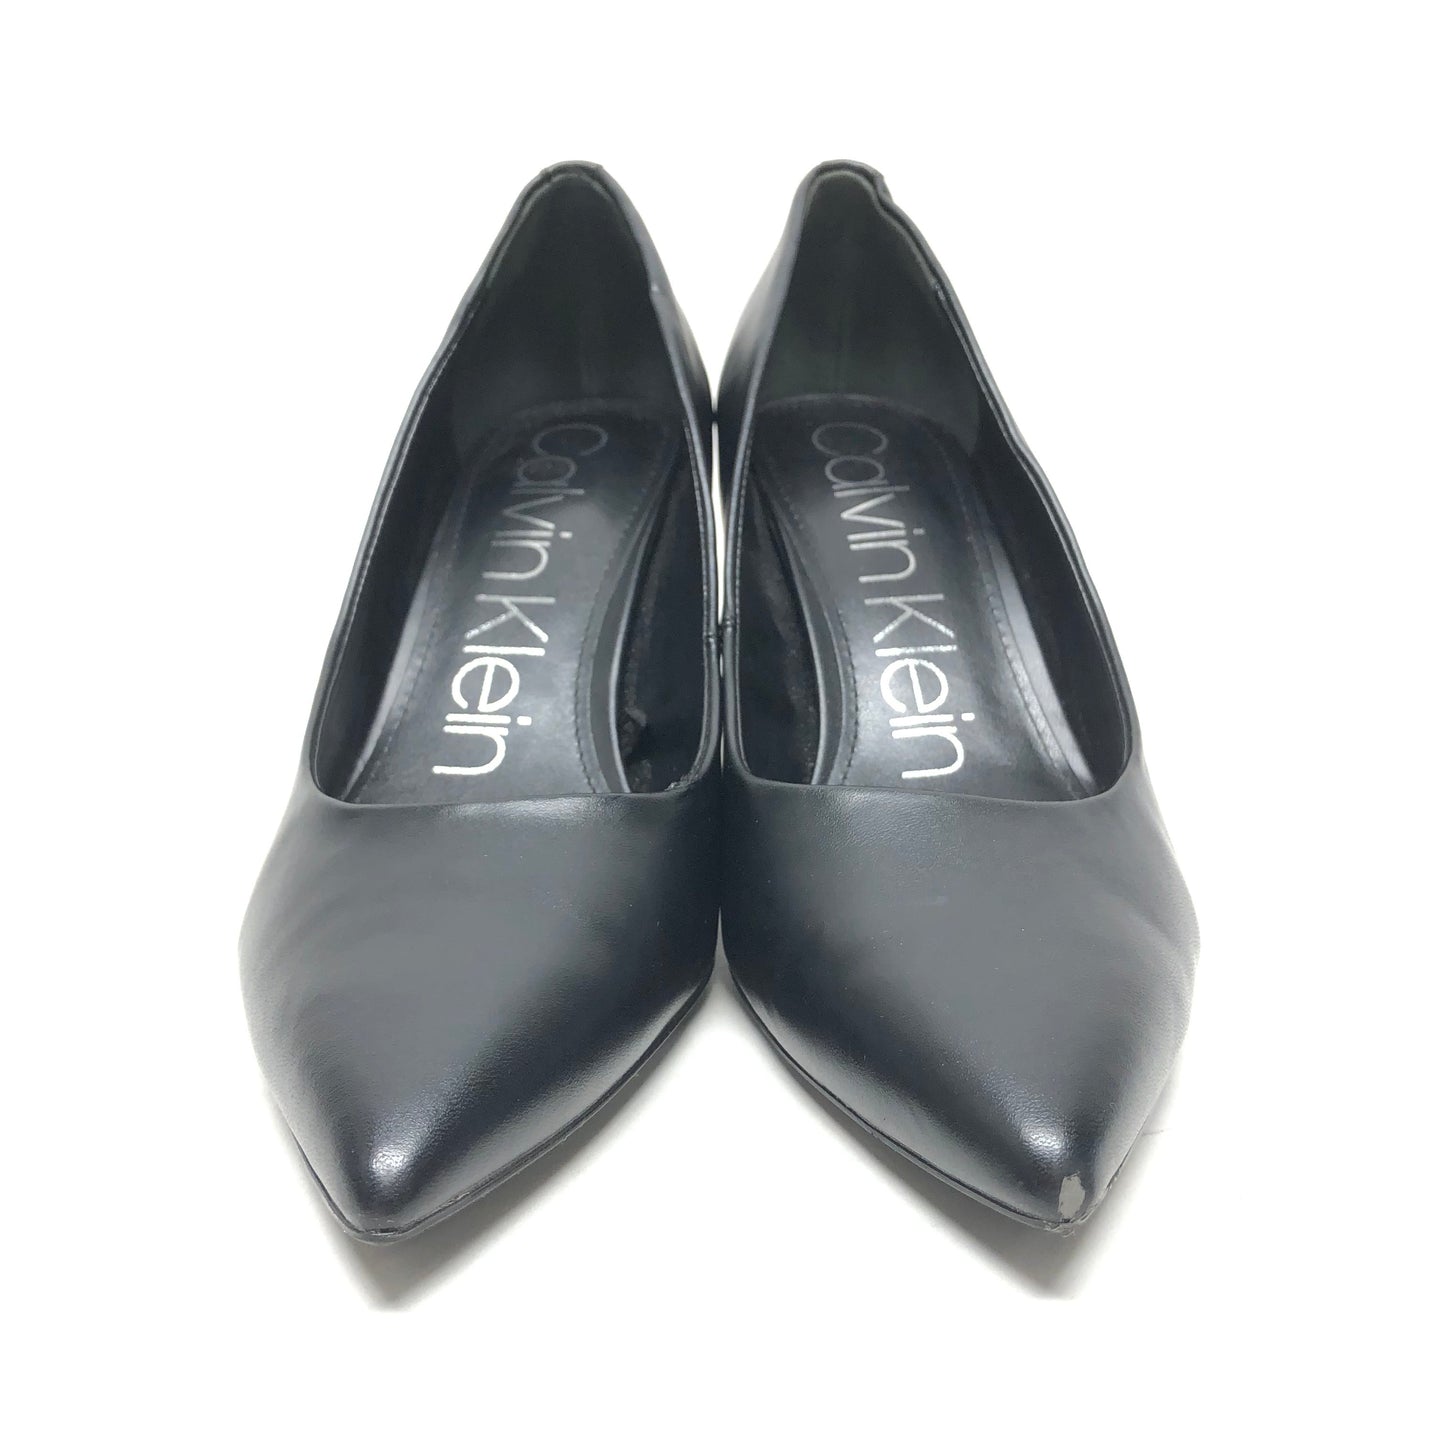 Shoes Heels Stiletto By Calvin Klein  Size: 10